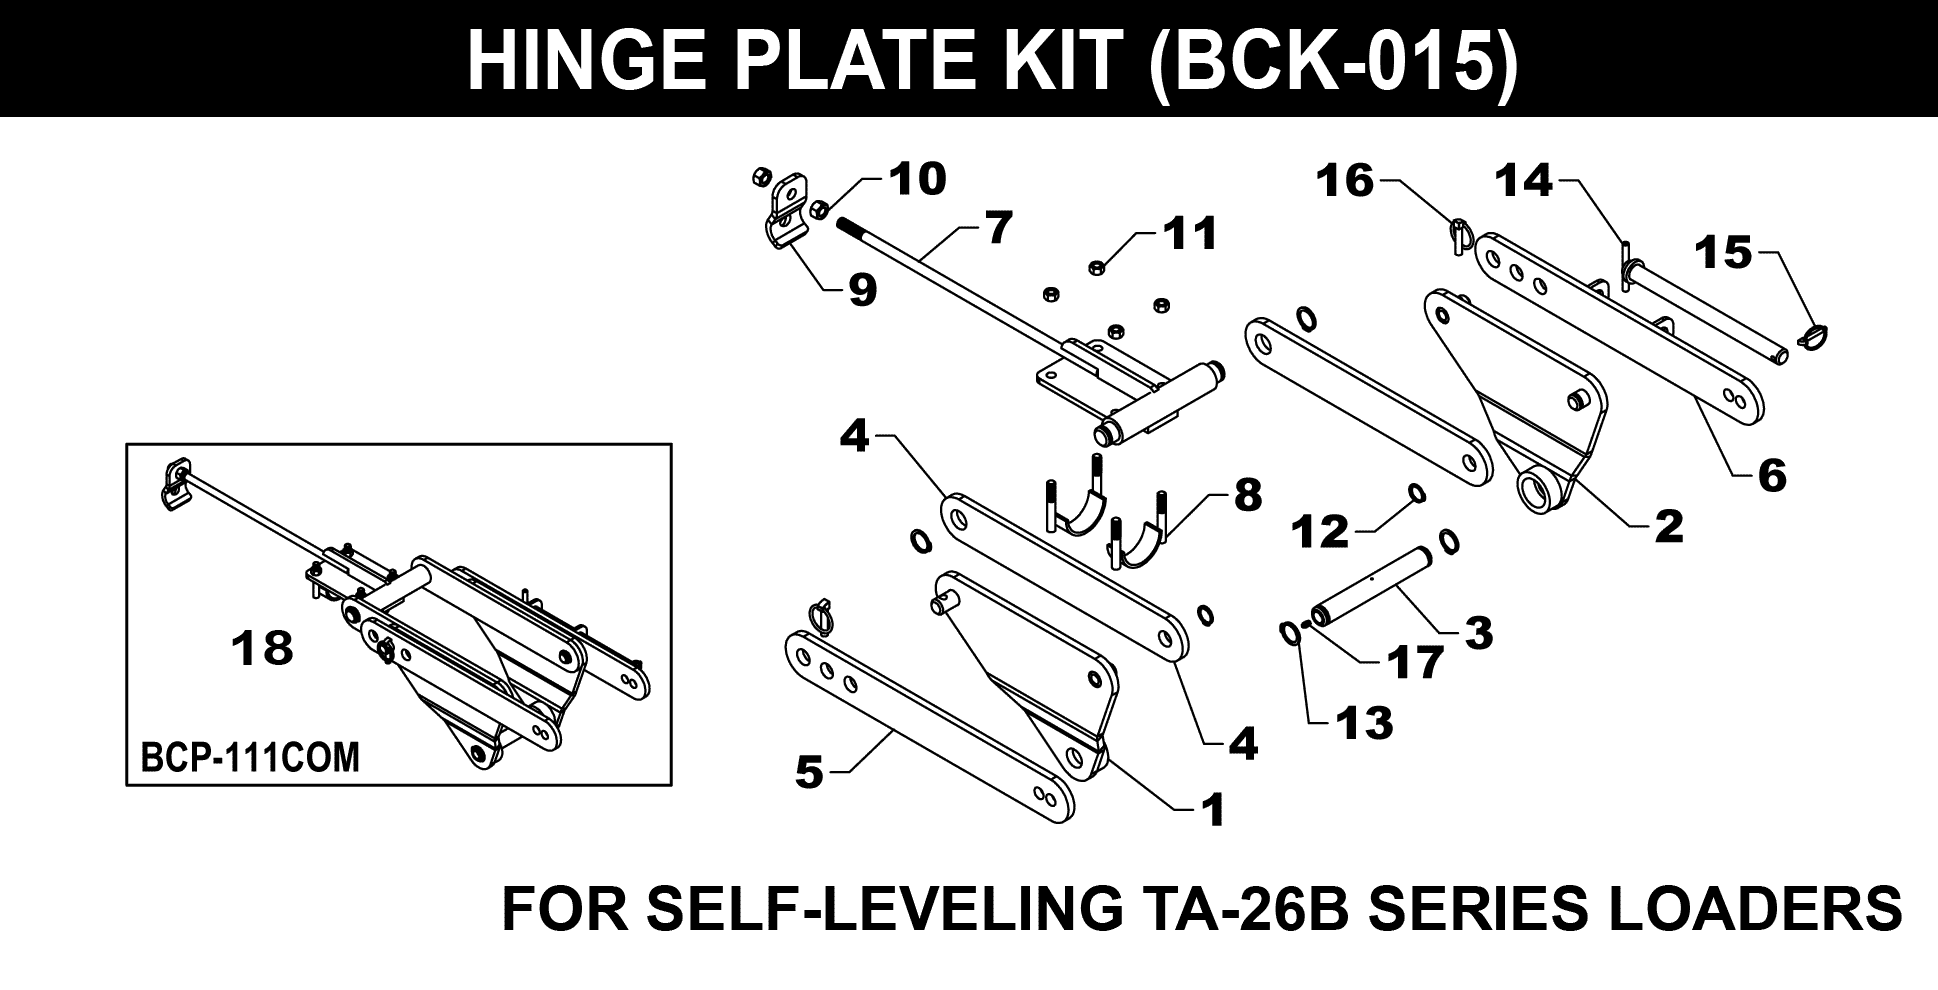 BCK-015 Hinge Plate Kit